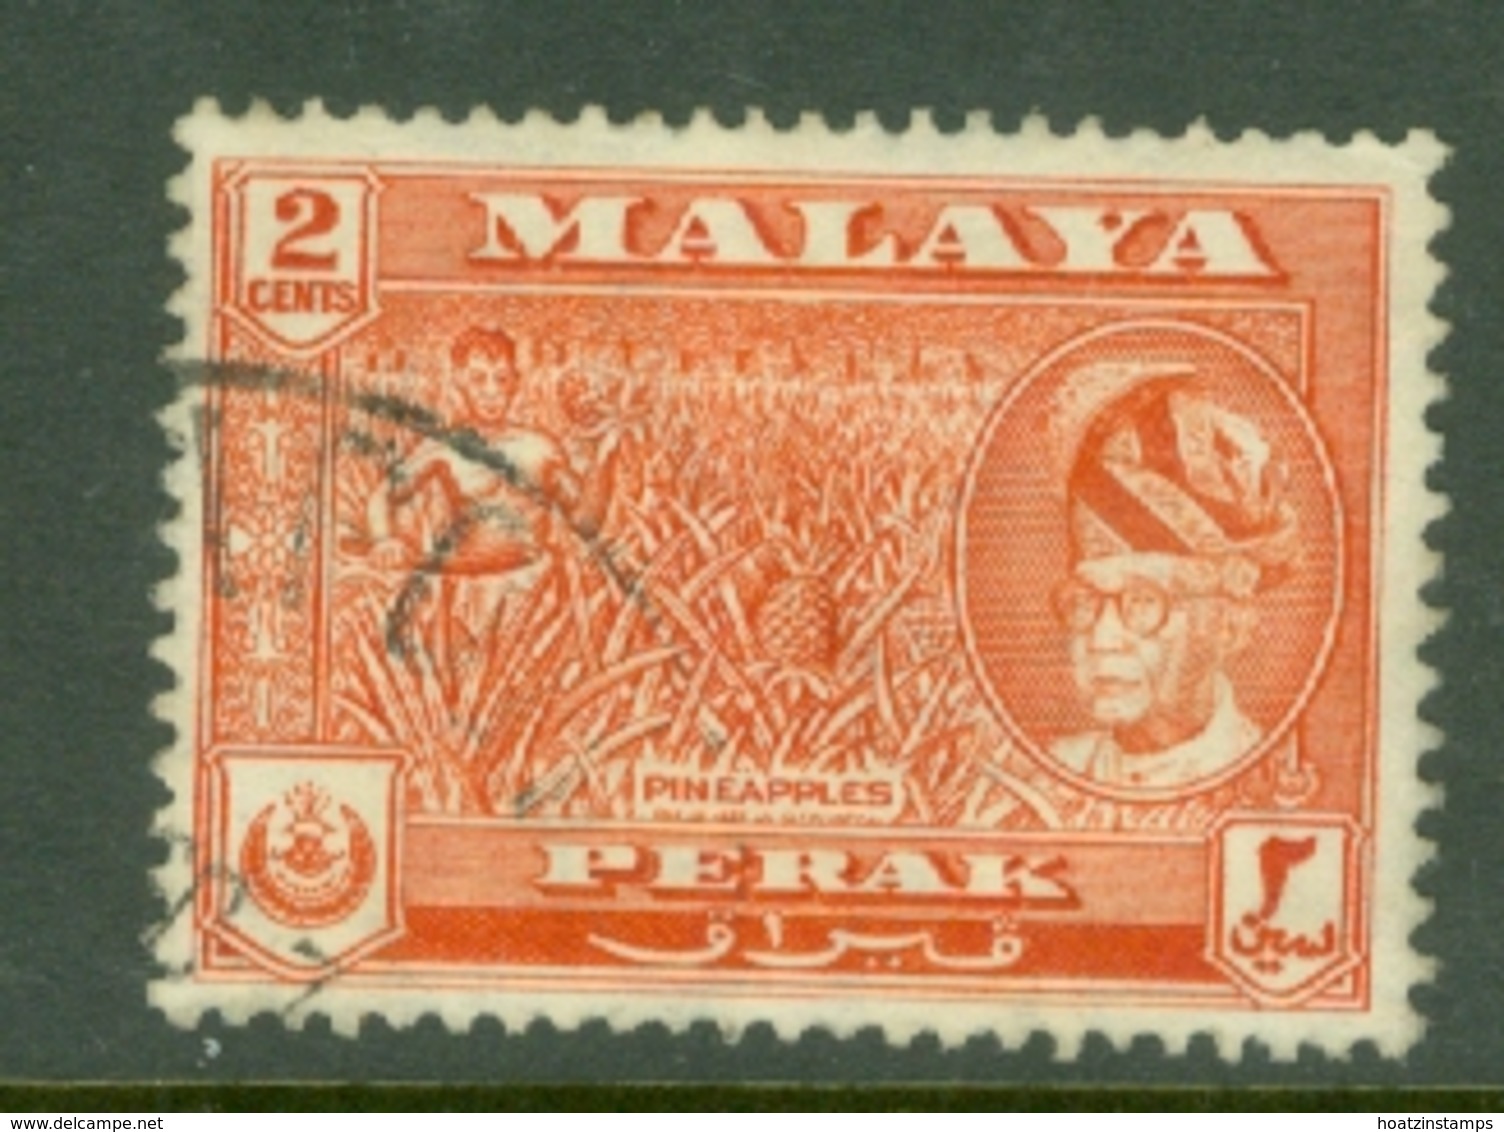 Malaya - Perak: 1957/61   Sultan Yussuf 'Izzuddin Shah - Pictorial   SG151    2c   Orange-red  Used - Perak